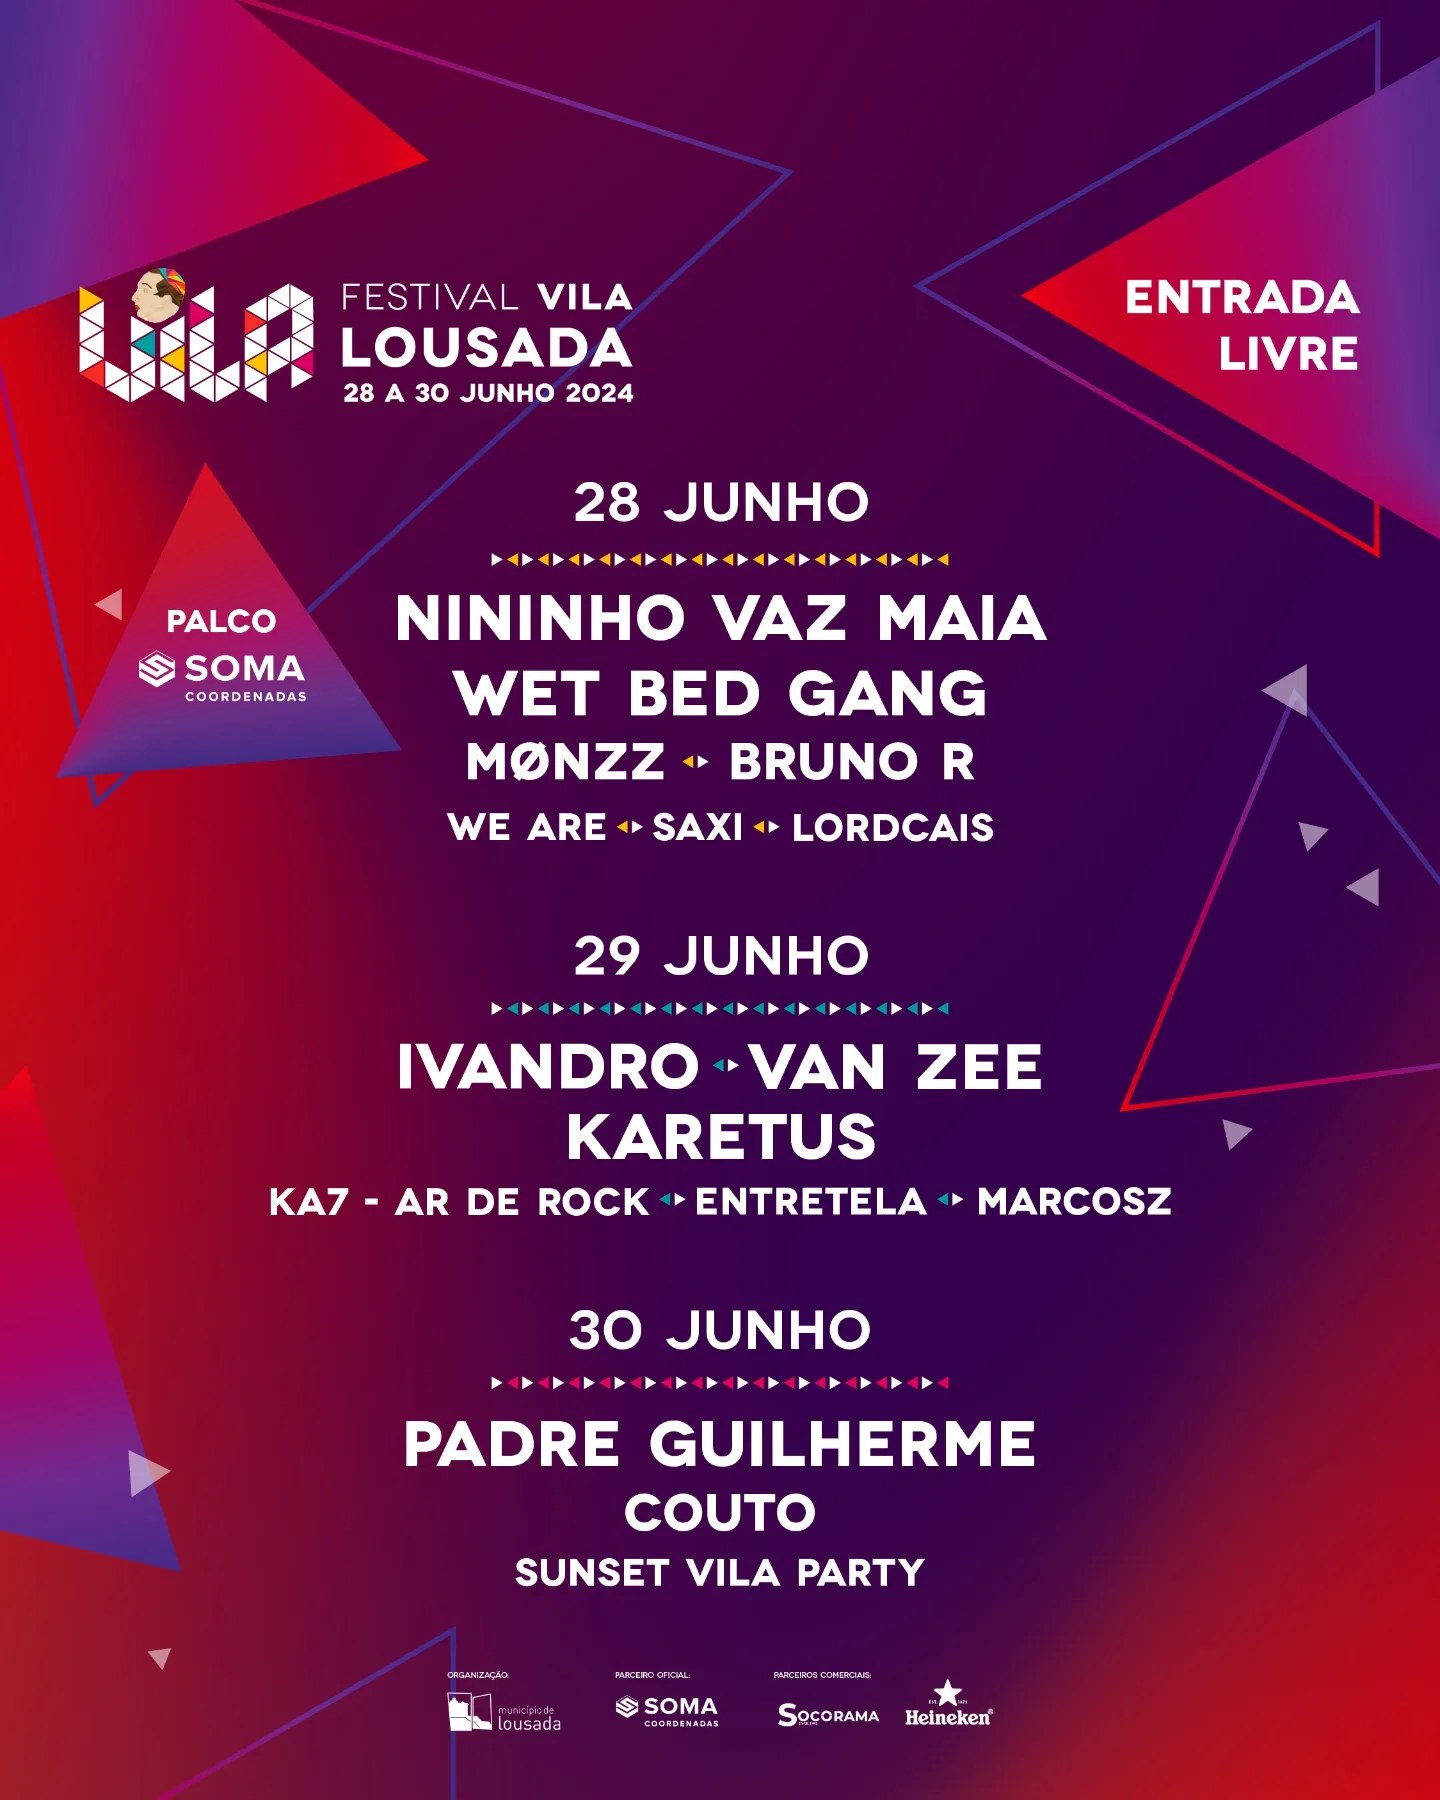 Festival Vila 2024 - Lousada